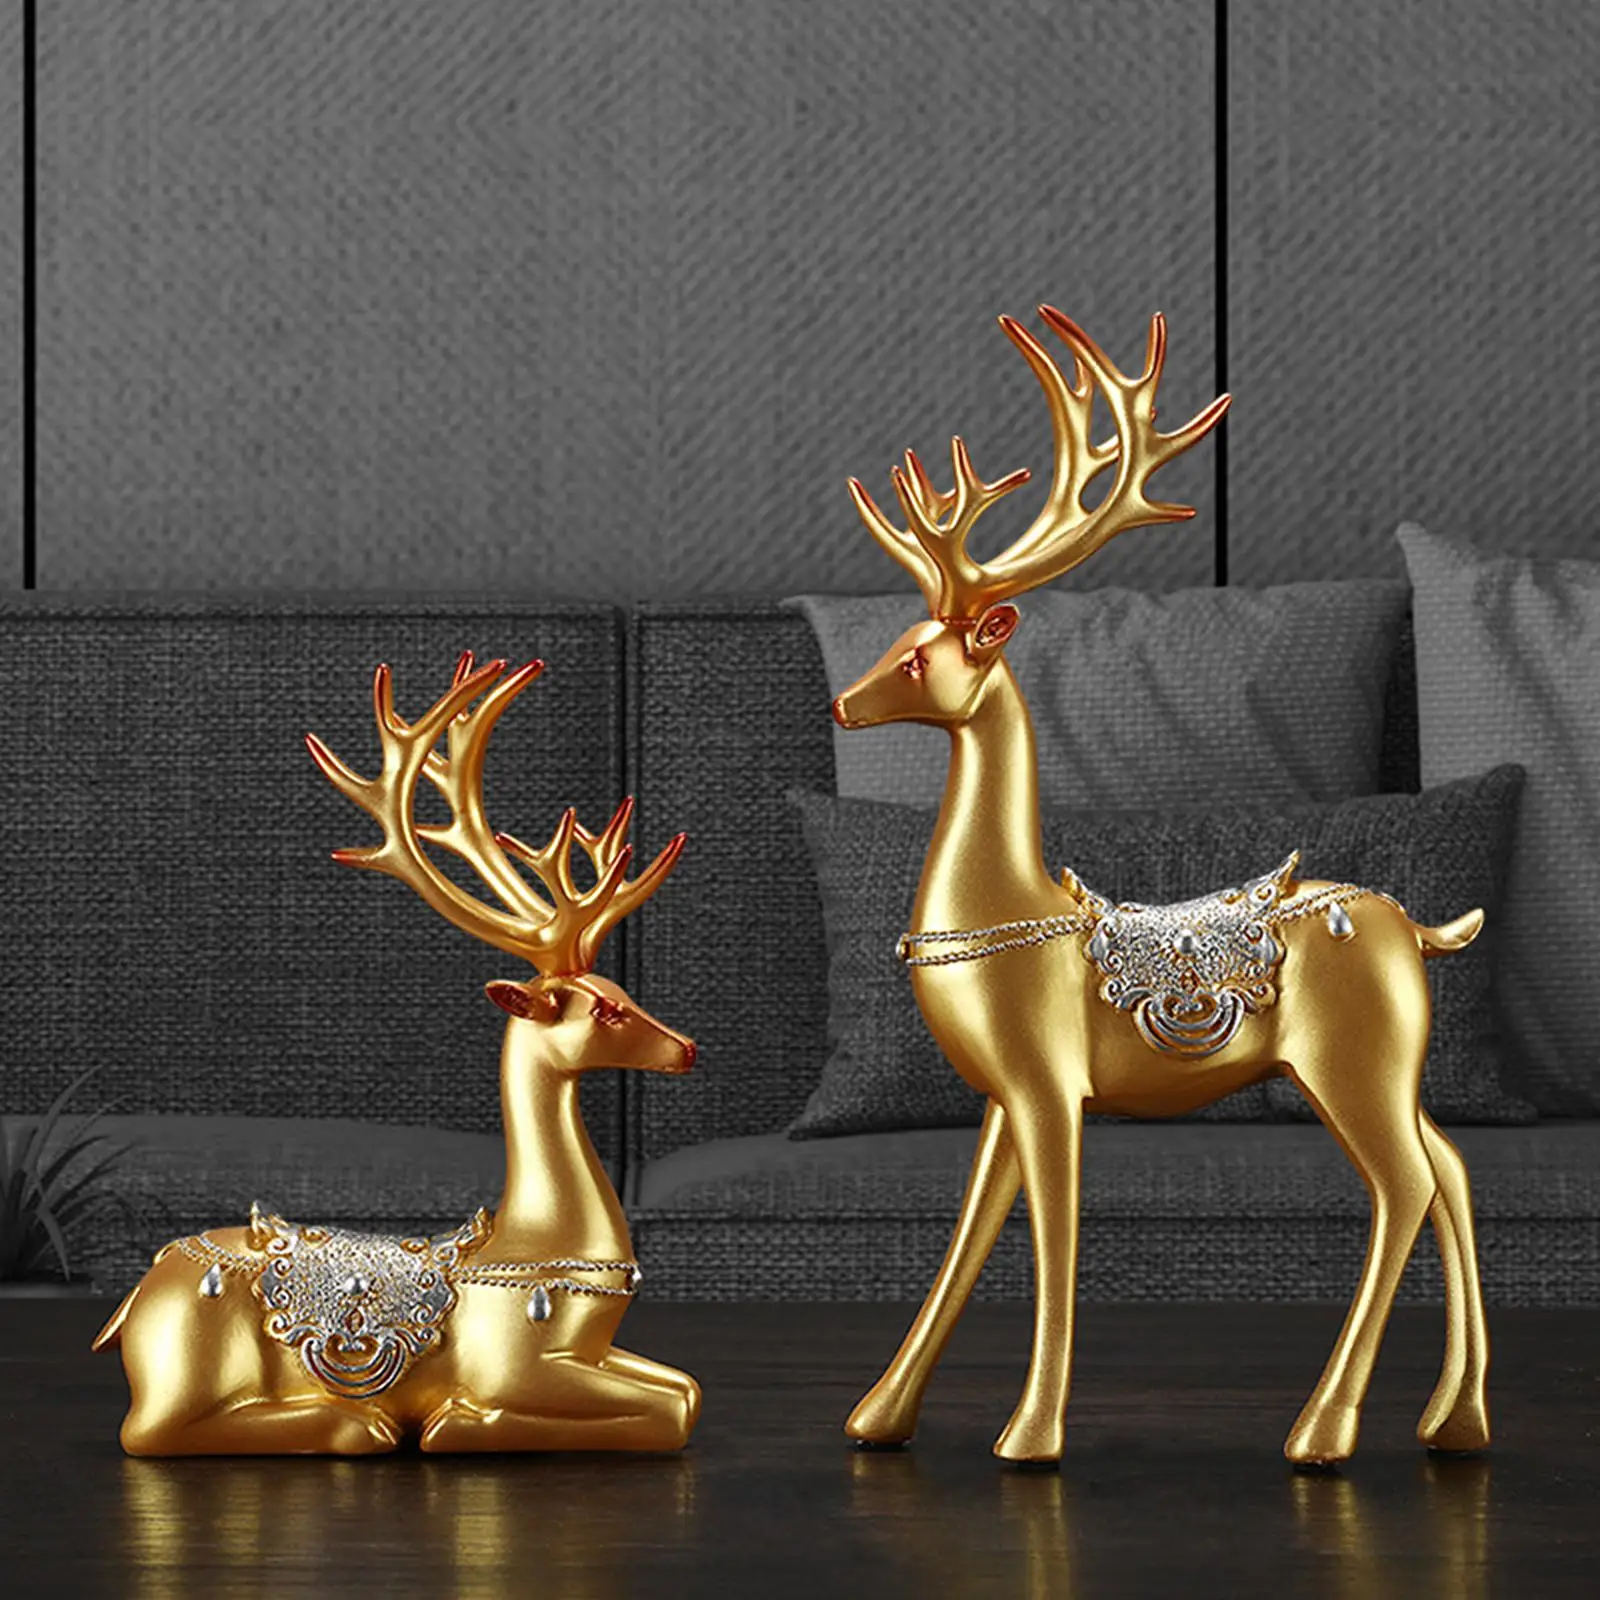 Set of 2 Reindeer Figurines Deer Statues for Home Desktop Bookshelf Decoration